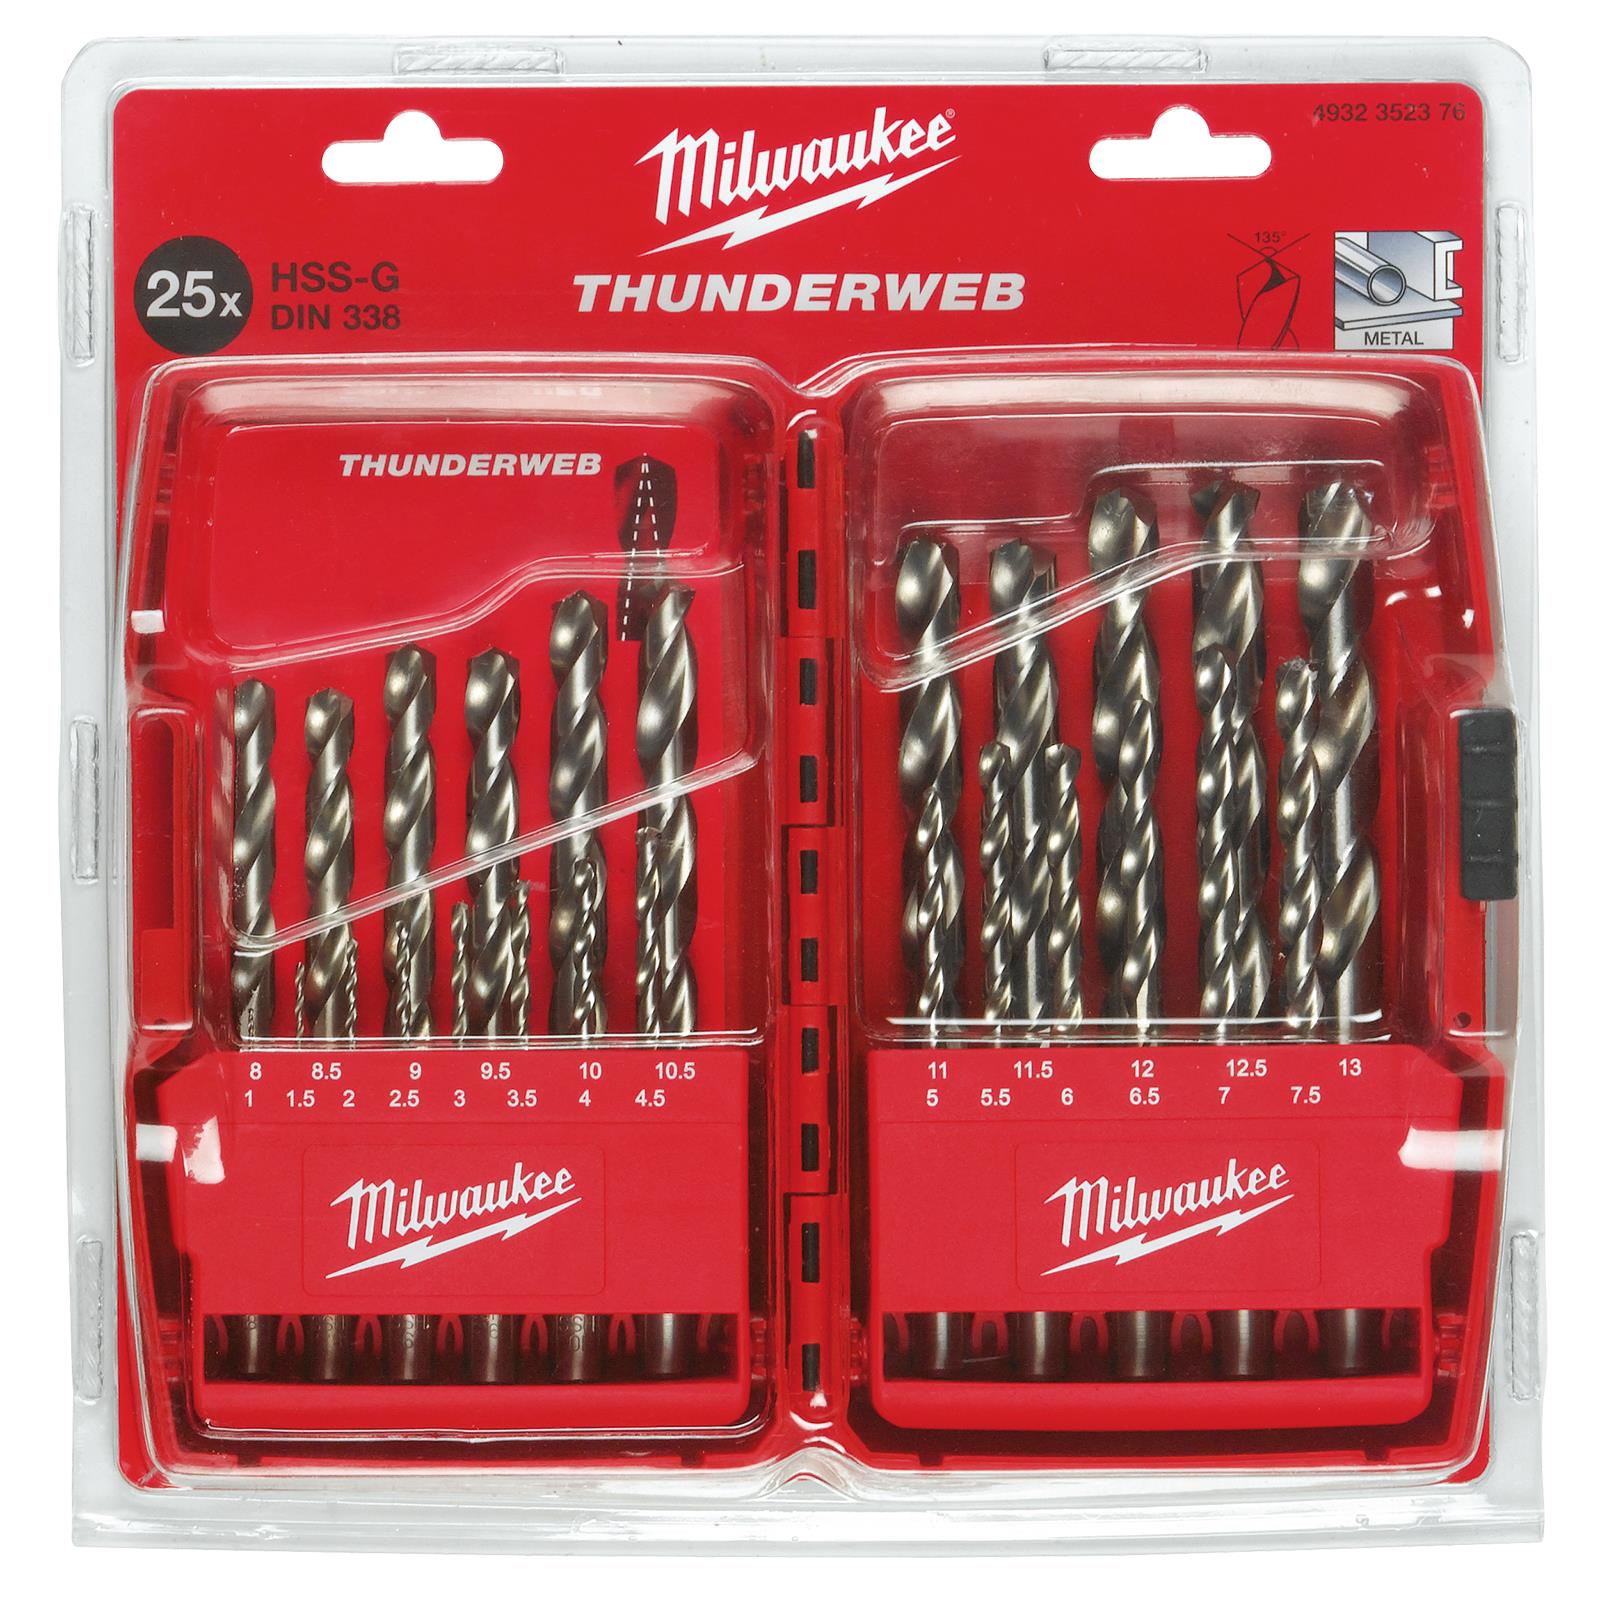 Milwaukee Thunderweb Metal HSS Drill Bit Set 25 Piece 1-13mm in Case